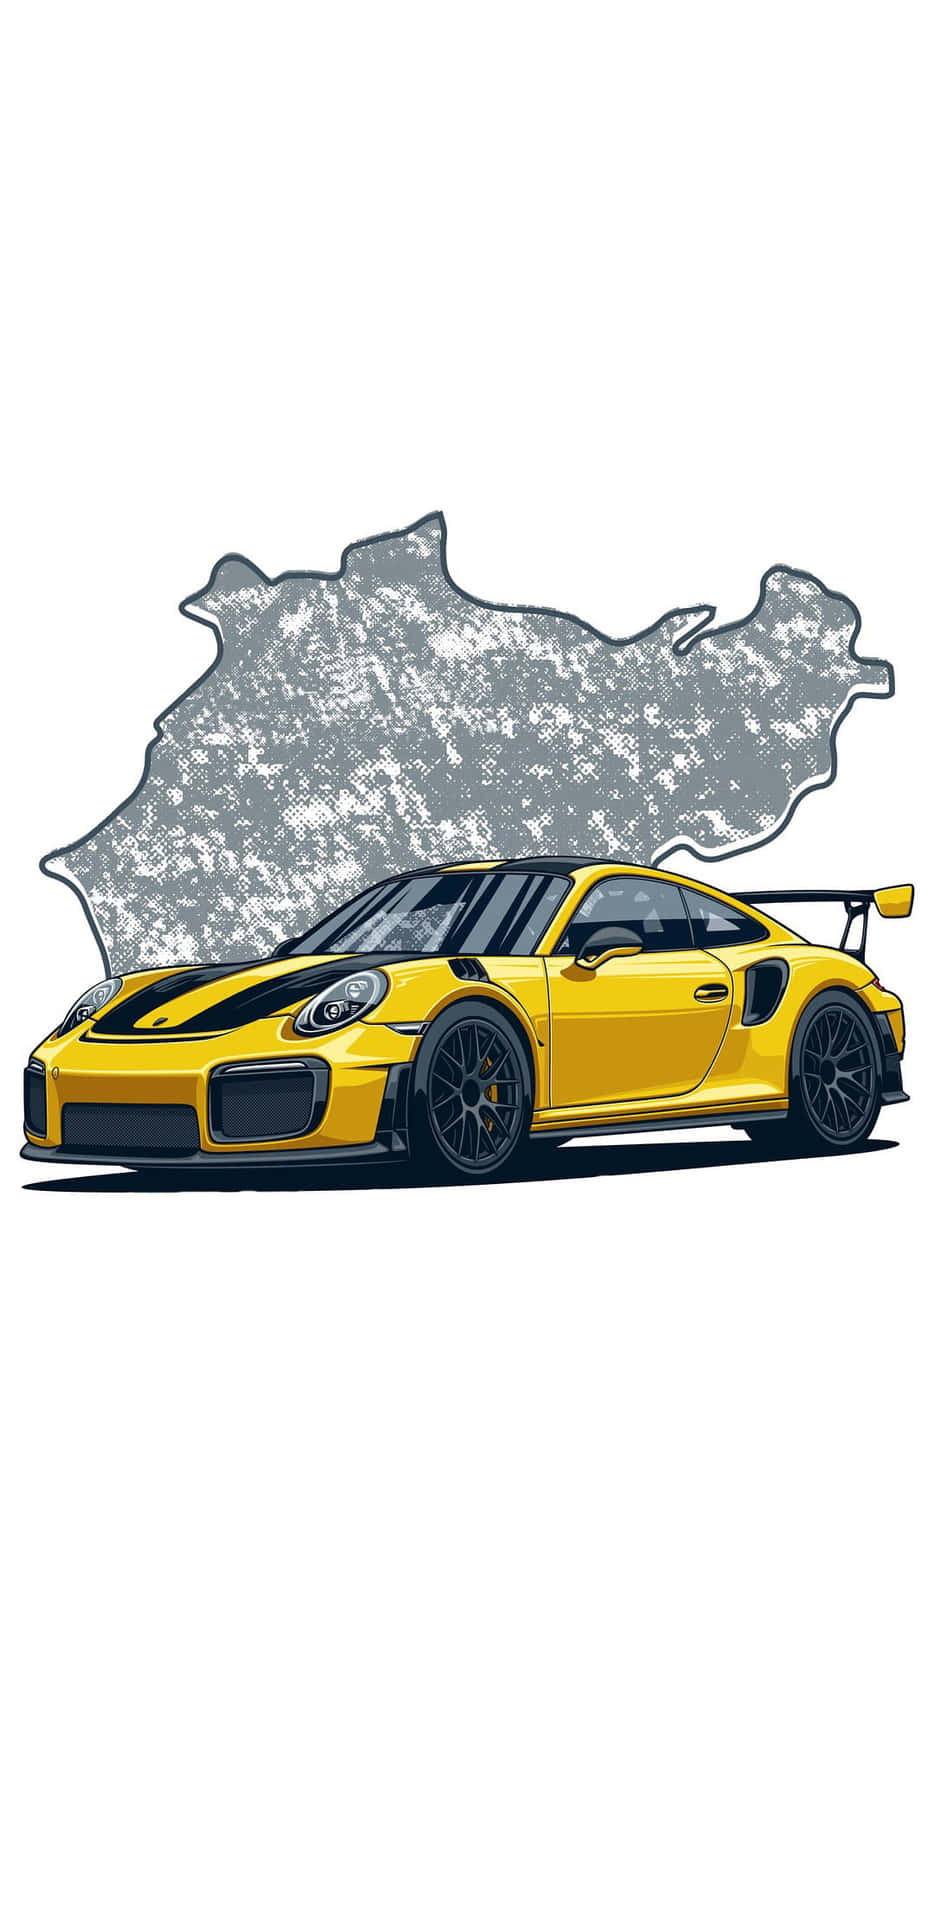 Porsche 911 GT3 RS  Mobile Wallpaper by Need4Swede on DeviantArt